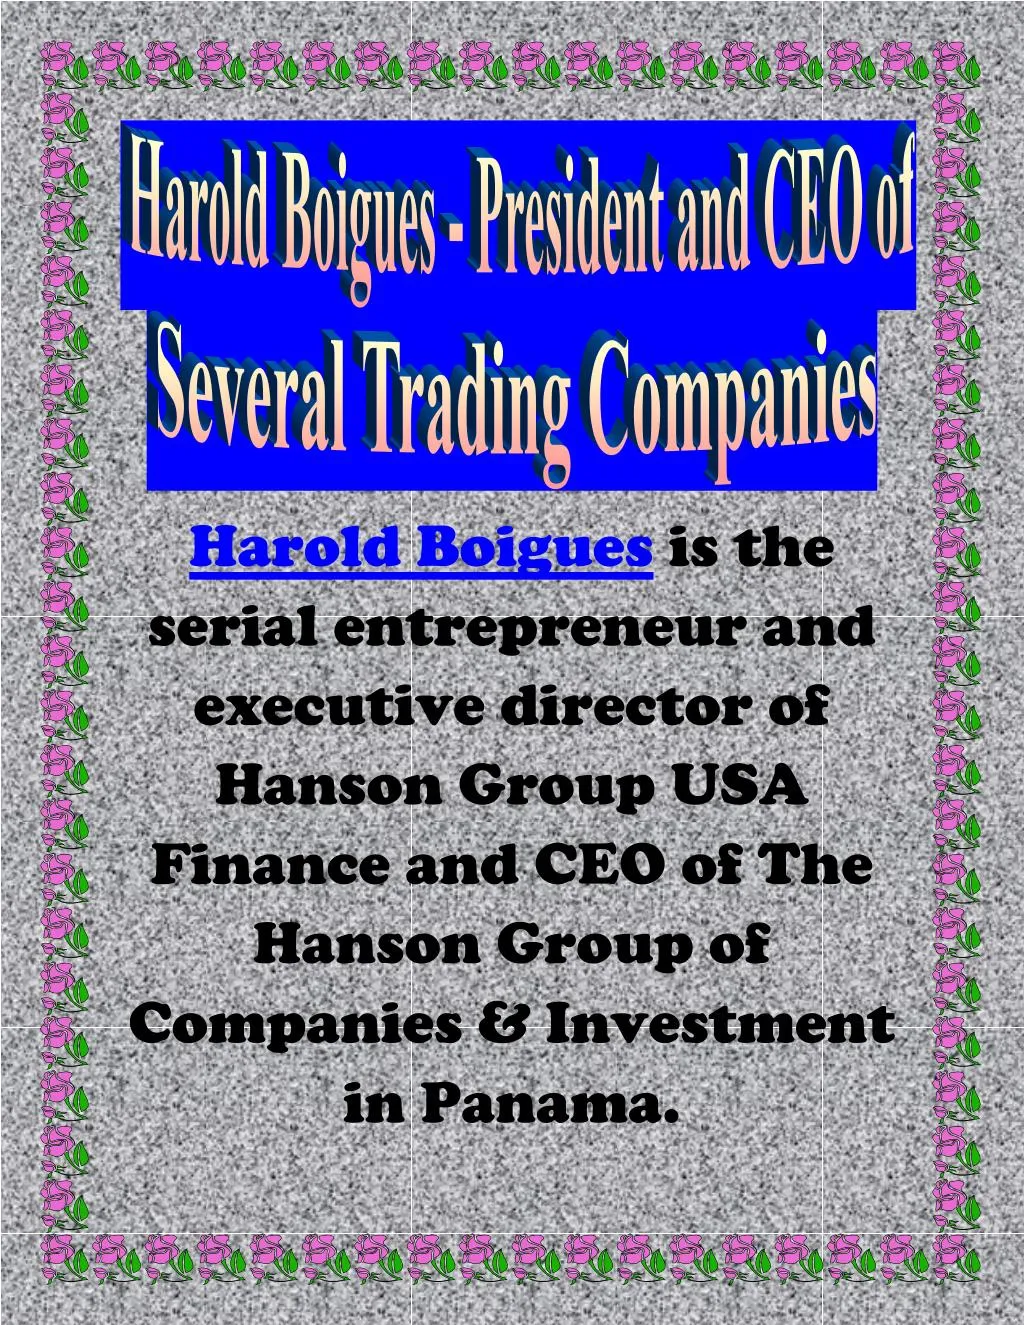 harold boigues is the serial entrepreneur